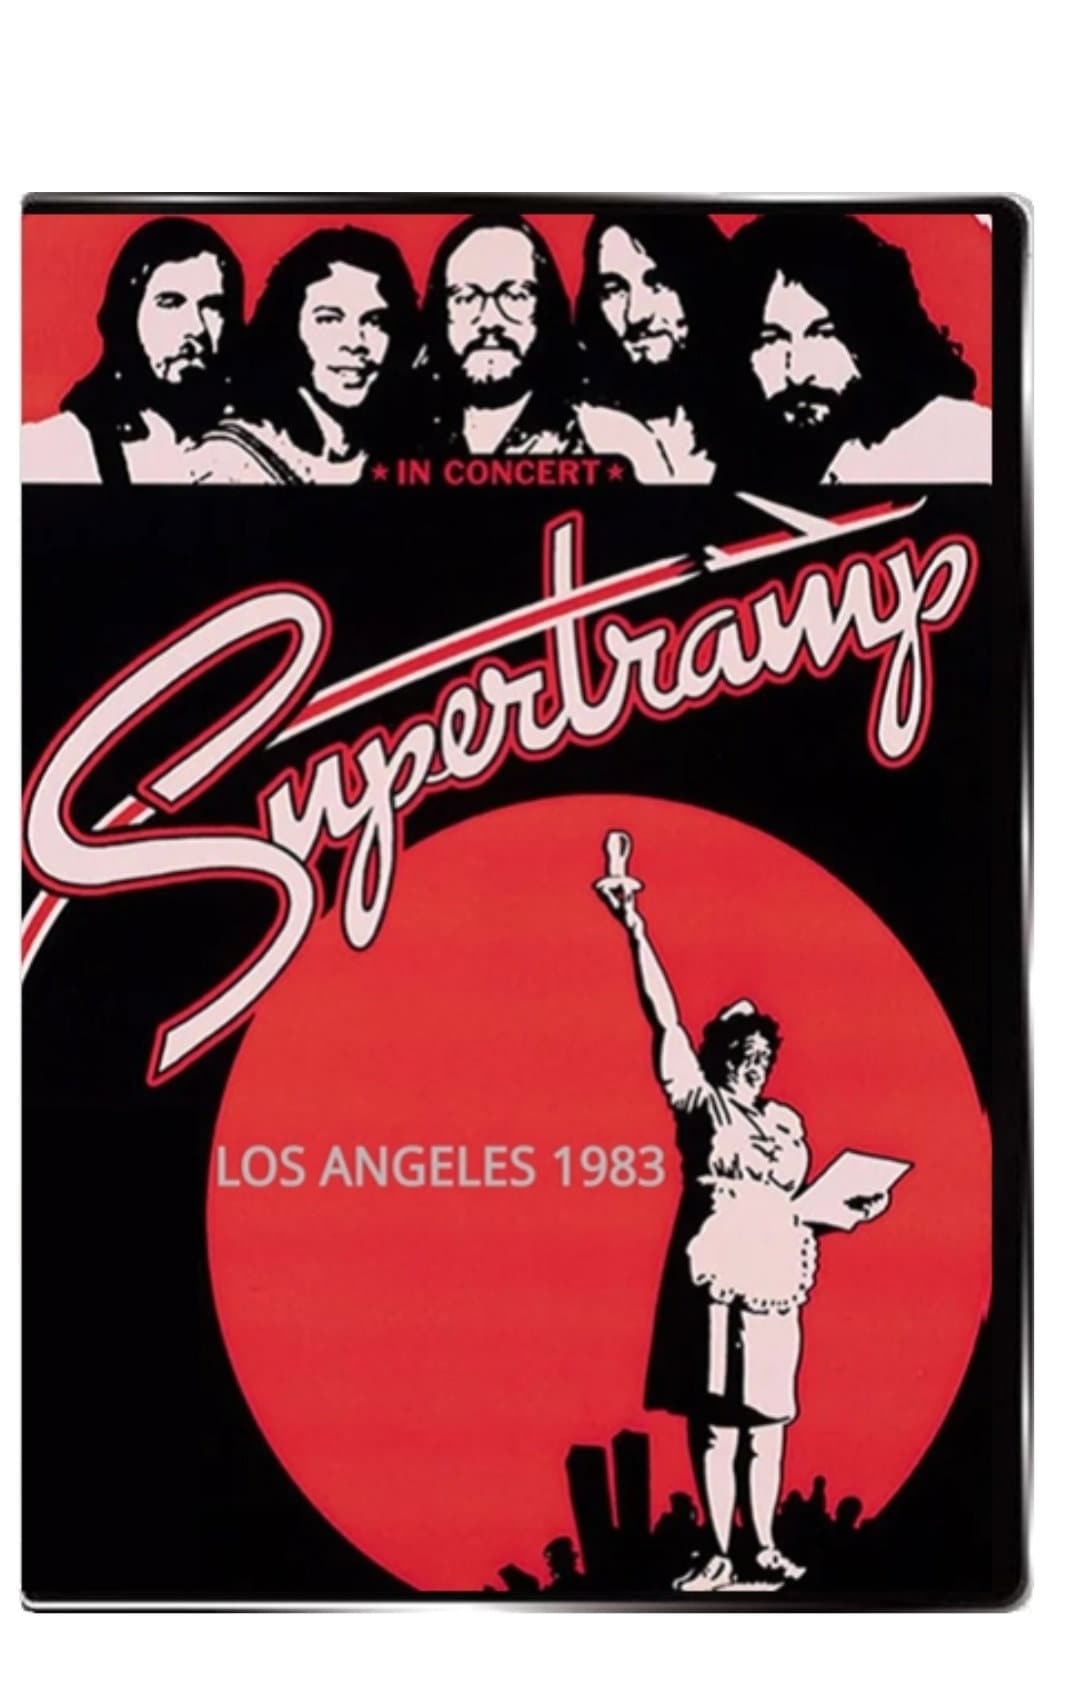 Supertramp in Concert Los Angeles 1983 DVD, 1983 